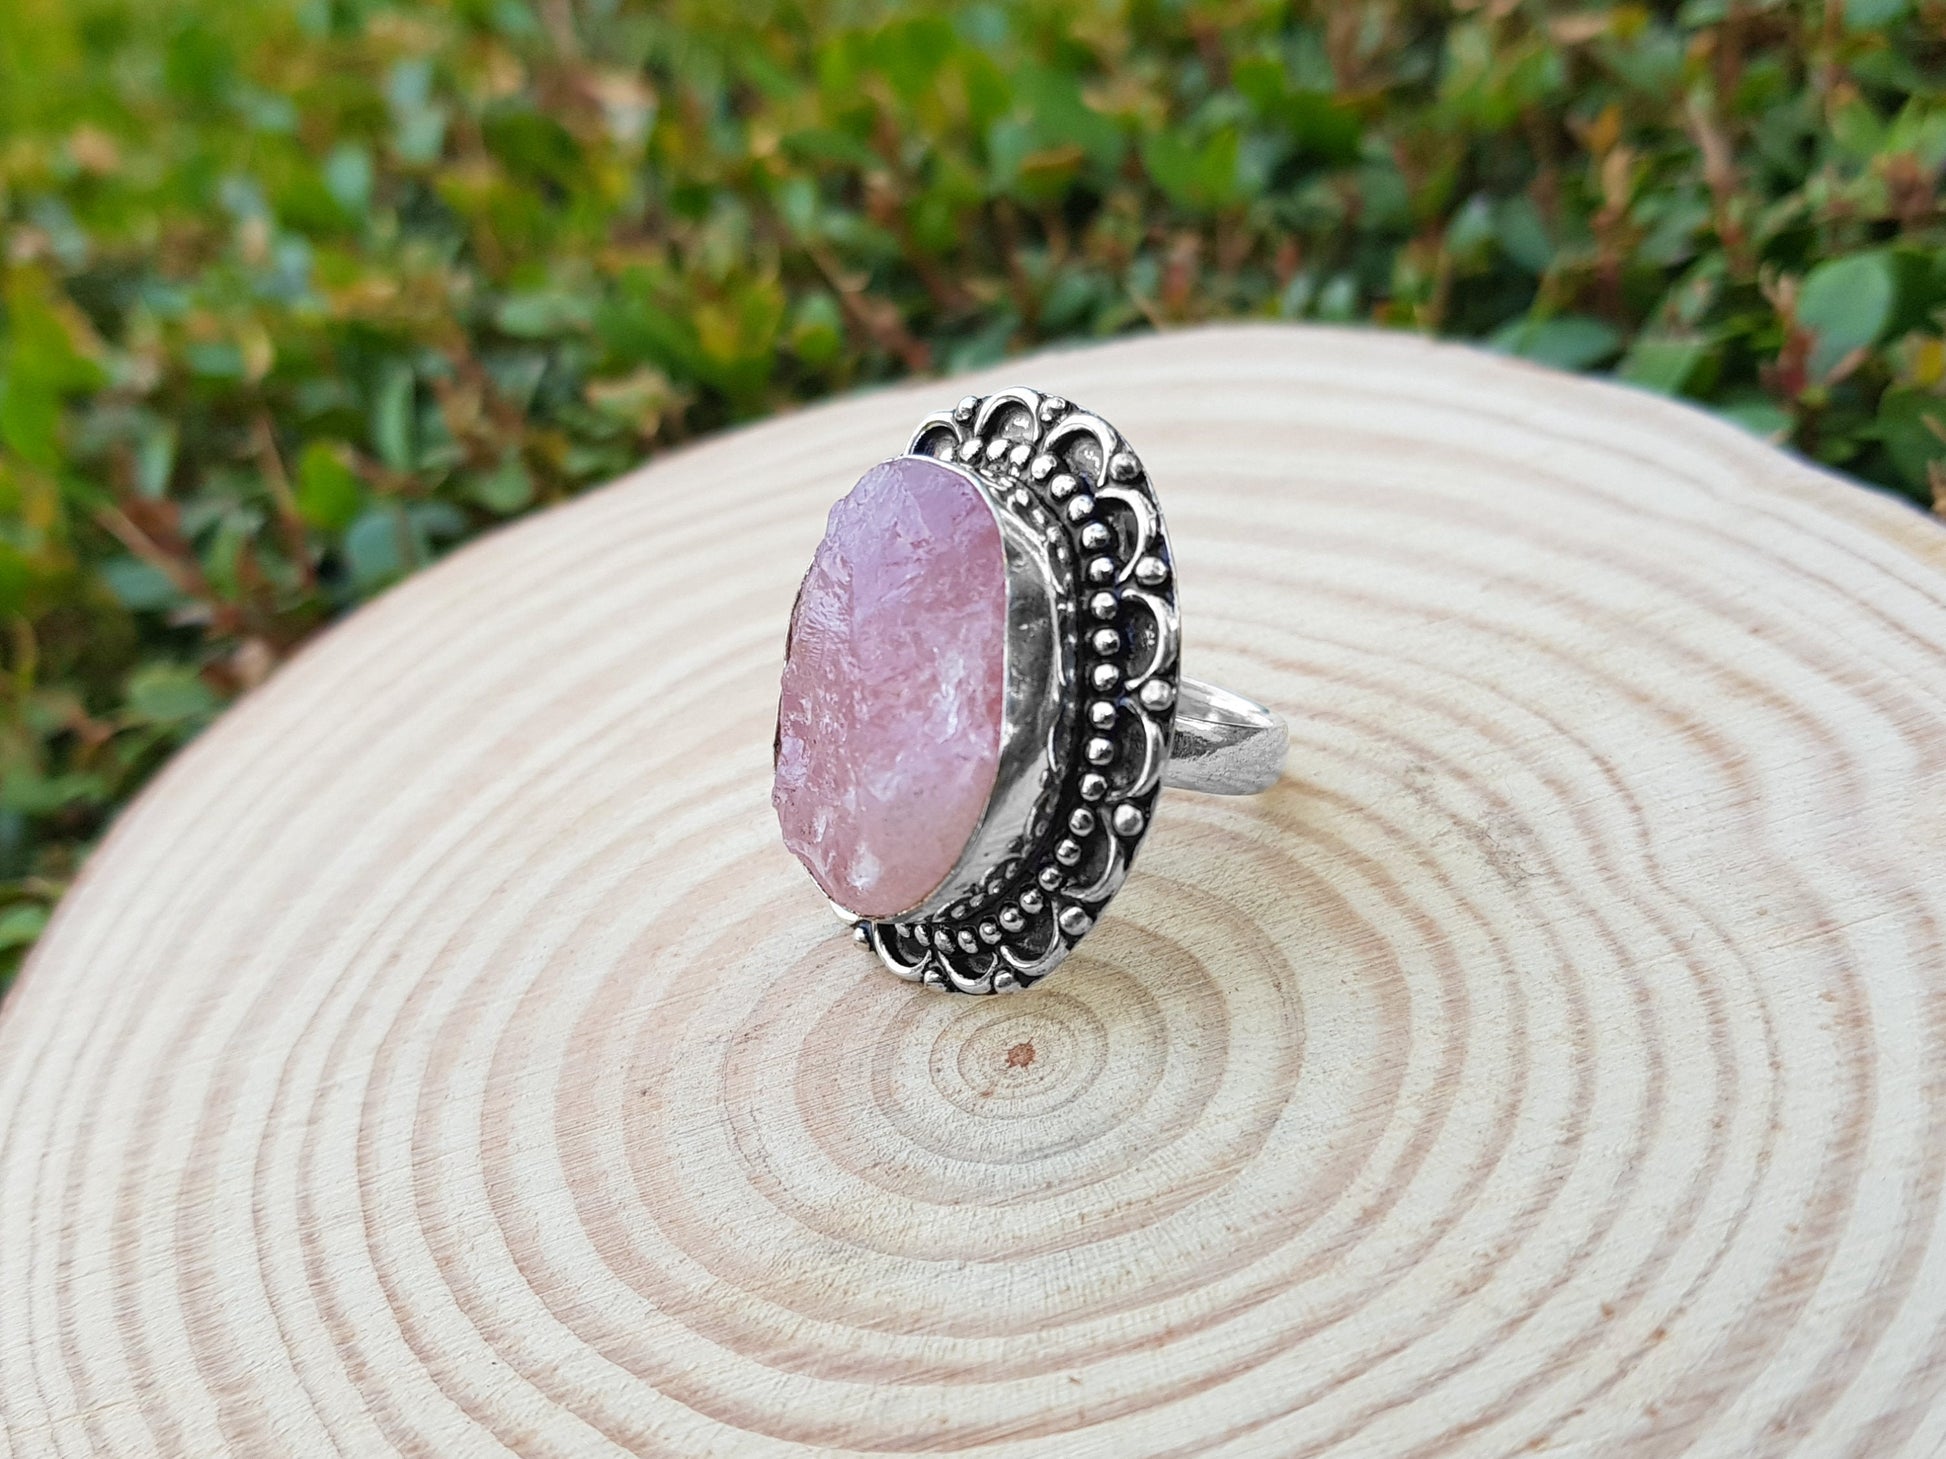 Rough Pink Rose Quartz Gemstone Ring In Sterling Silver Size US 6 1/2 Big Statement Ring